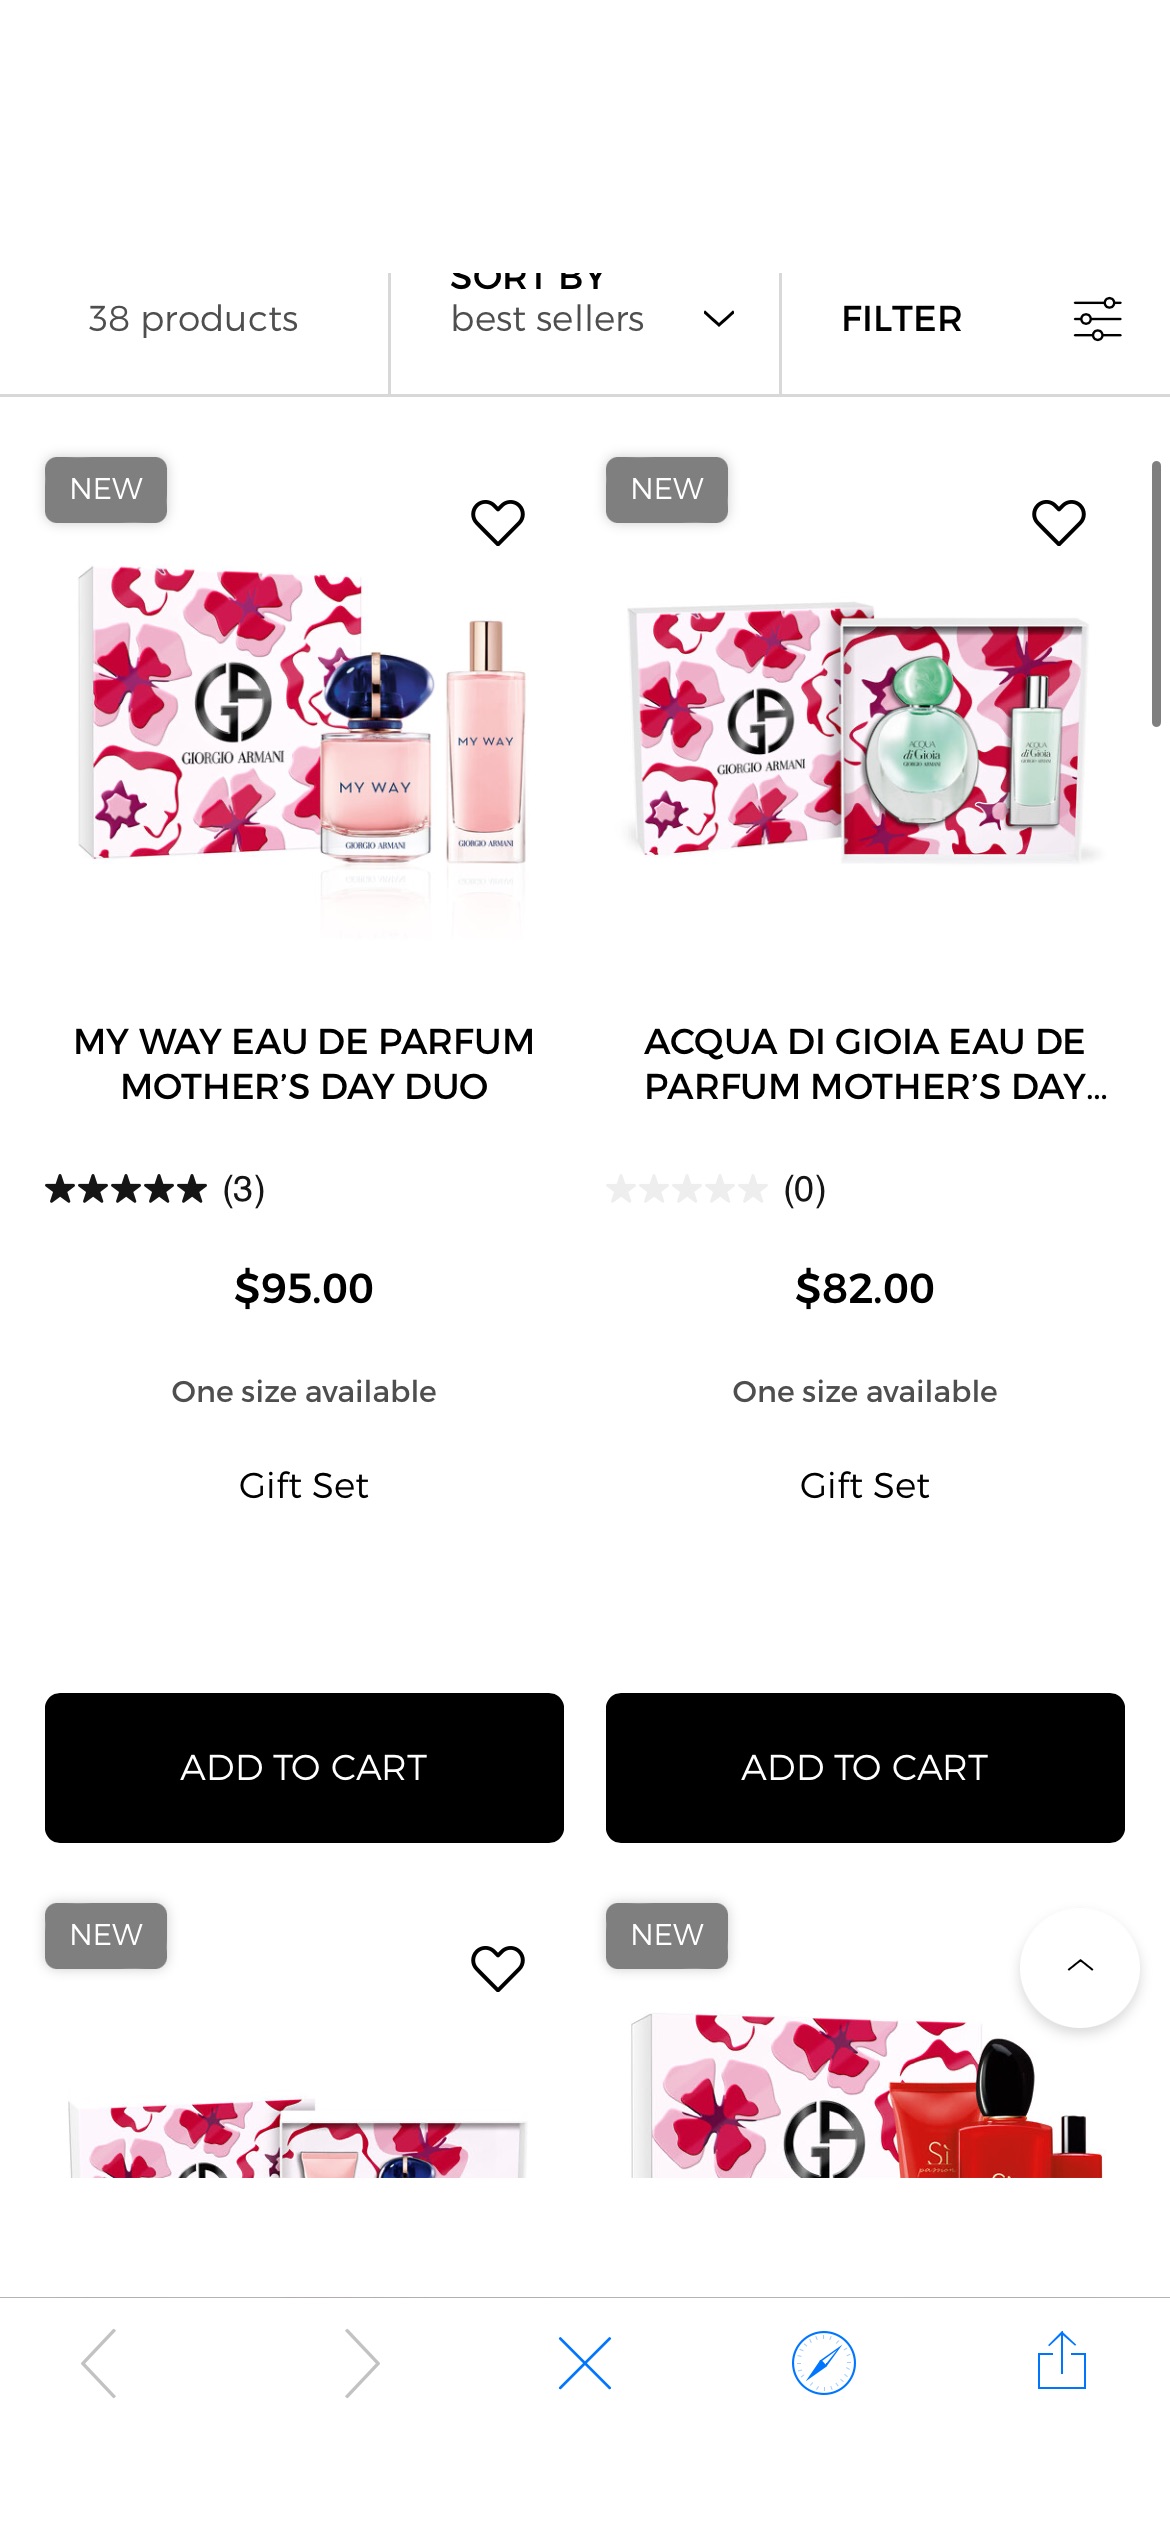 Mother's Day Gift Guide - Perfume & Makeup - Armani Beauty 阿玛尼美女：多亏了豪华礼品套装，让妈妈感觉很特别。立即购买她的完美礼物